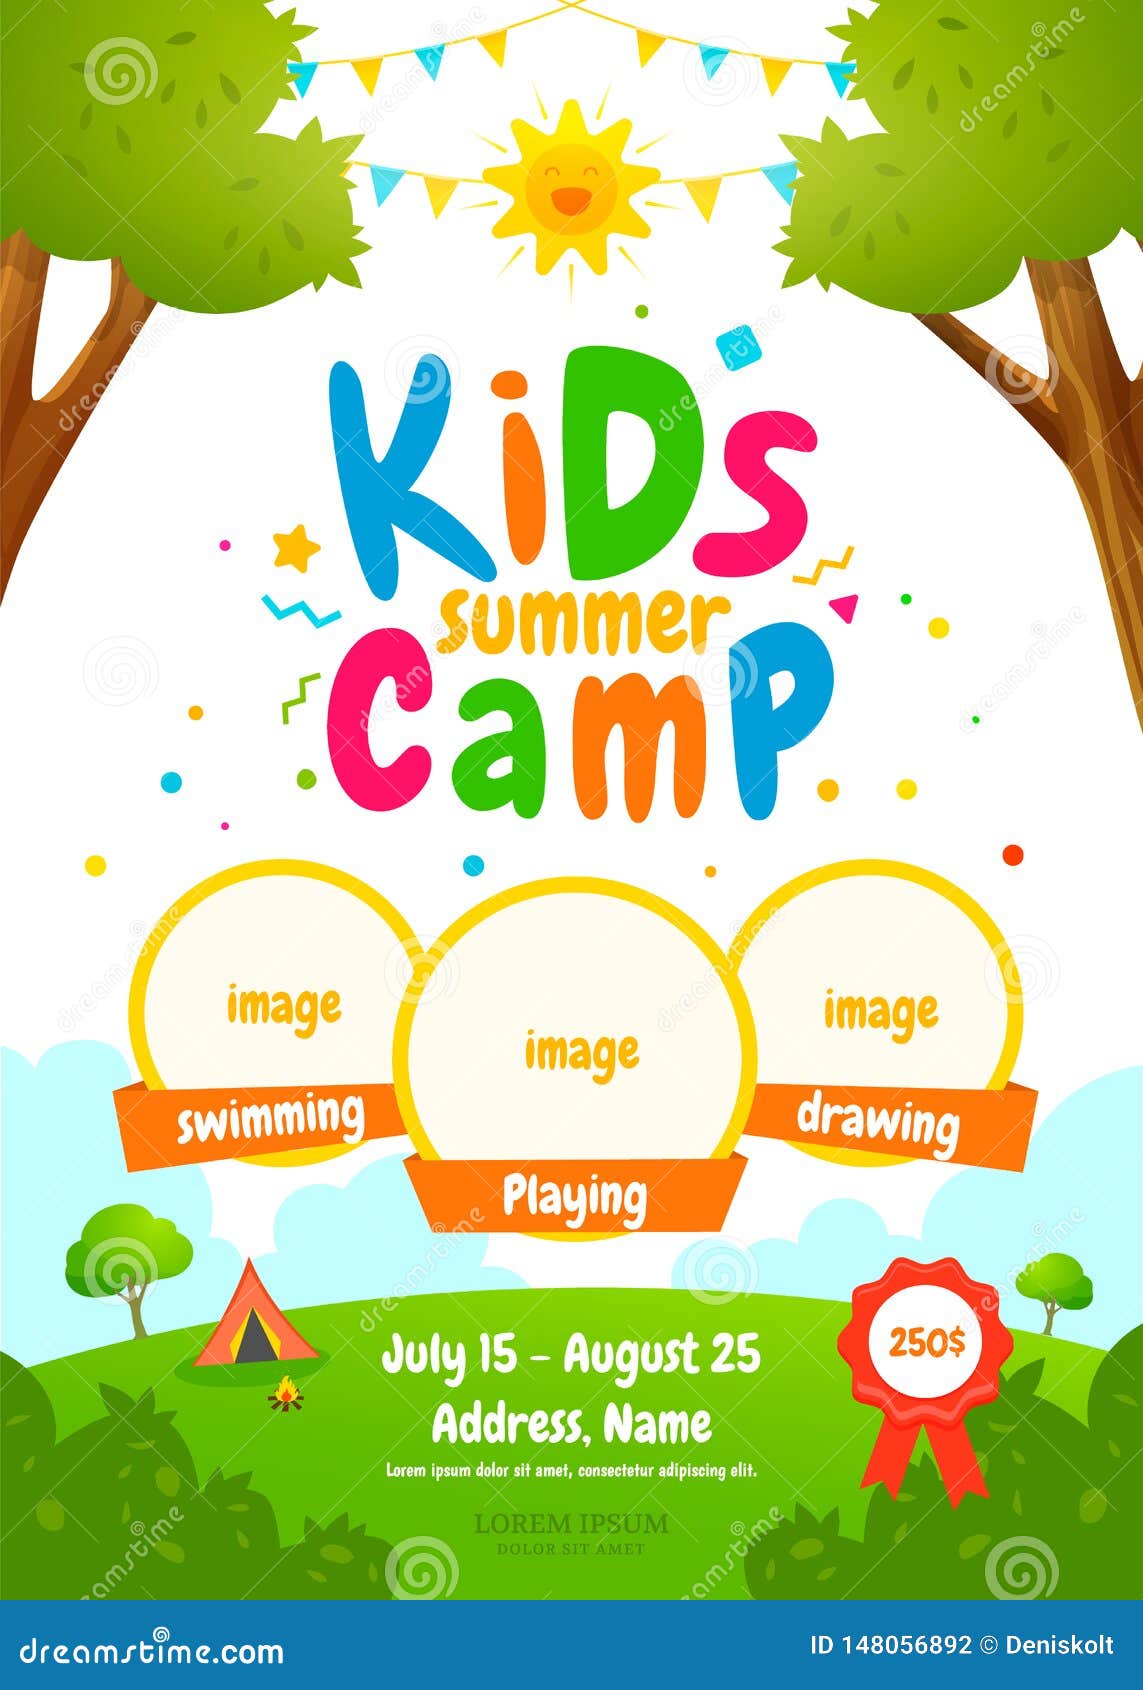 kids summer camp poster